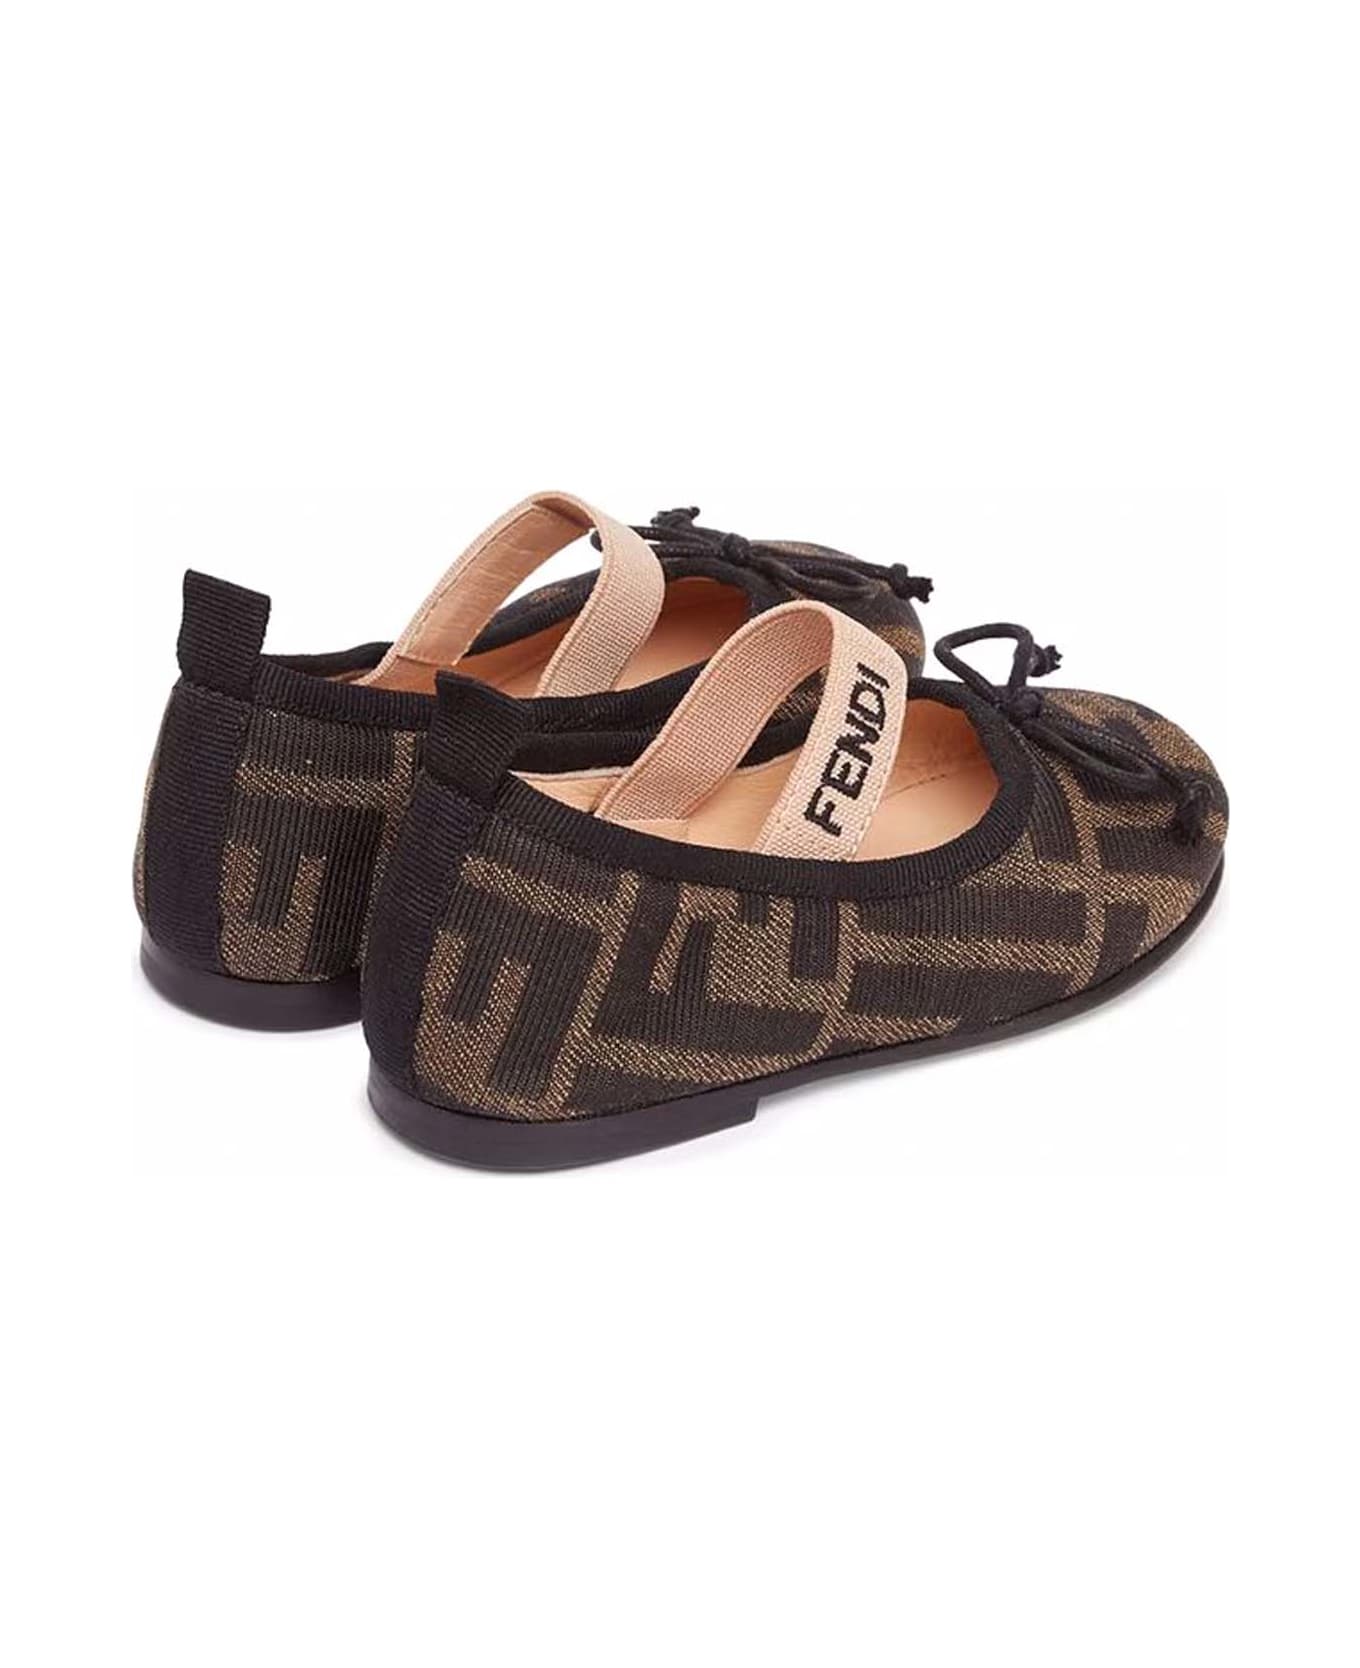 Fendi Kids Flat Shoes Brown - Brown